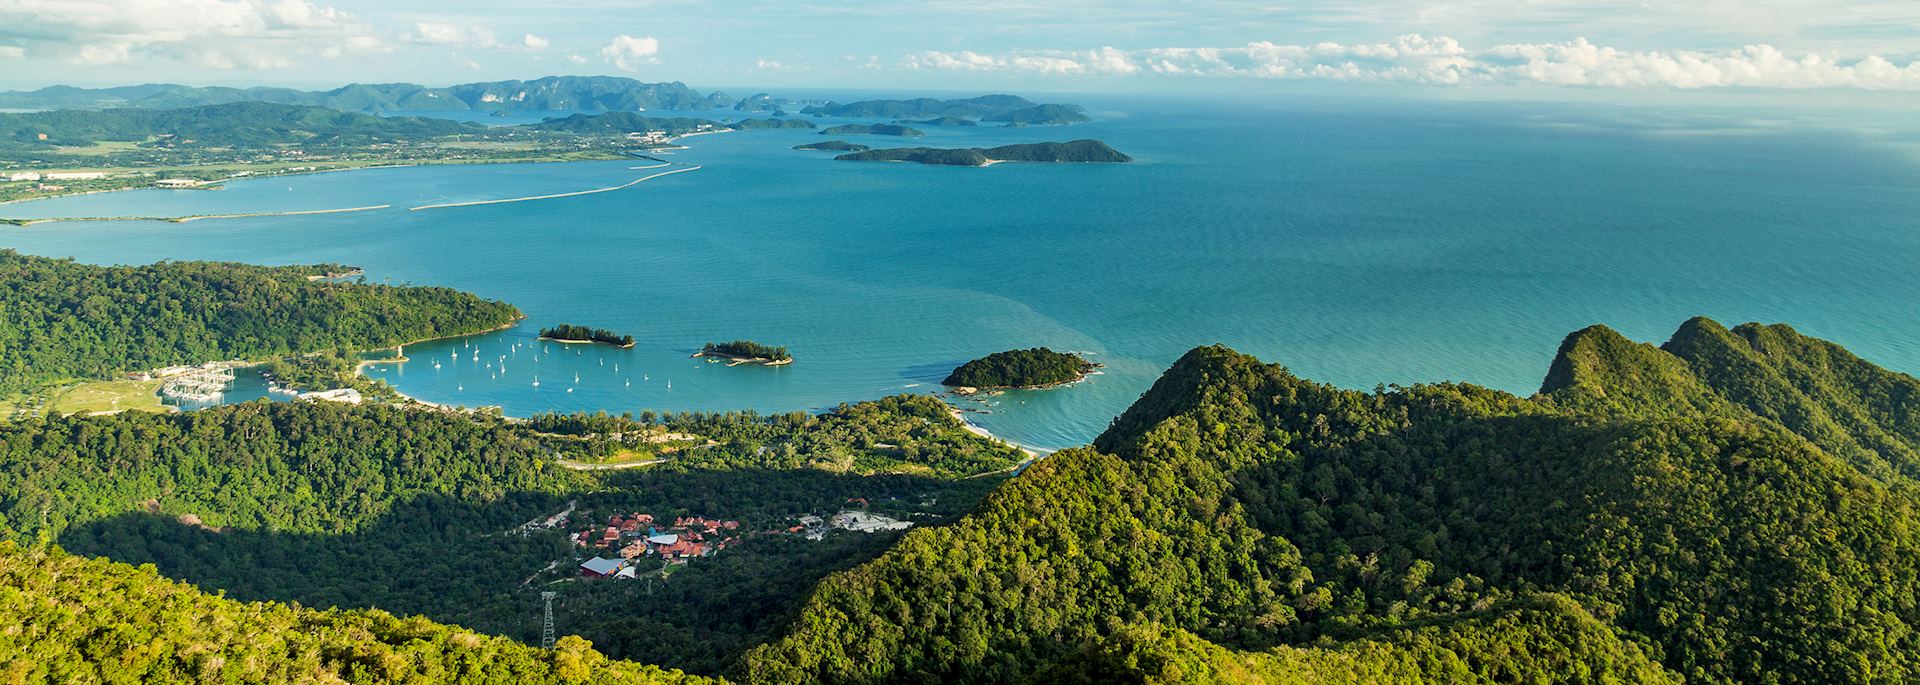 Langkawi Island, Malaysia